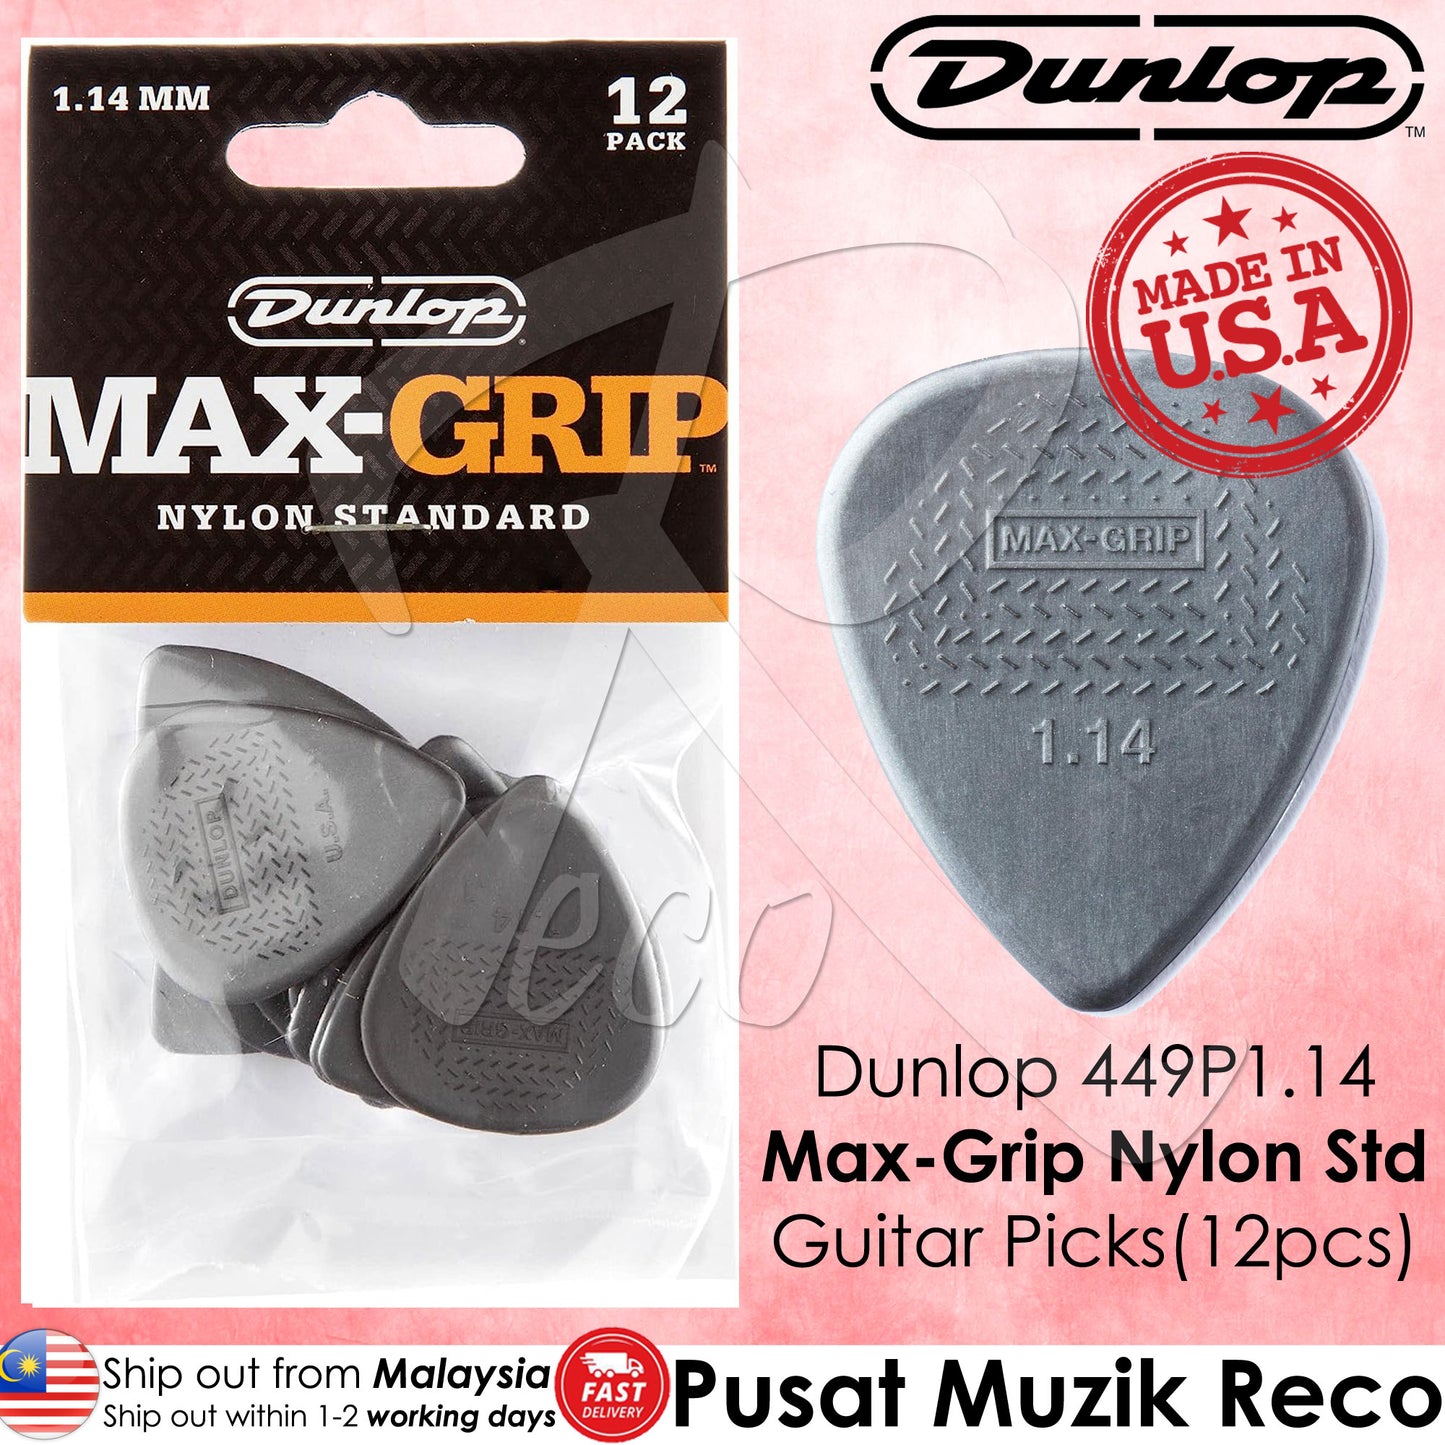 Jim Dunlop 449P1.14 Max-Grip Nylon Standard, Carbon, 1.14mm, 12/Player's Pack